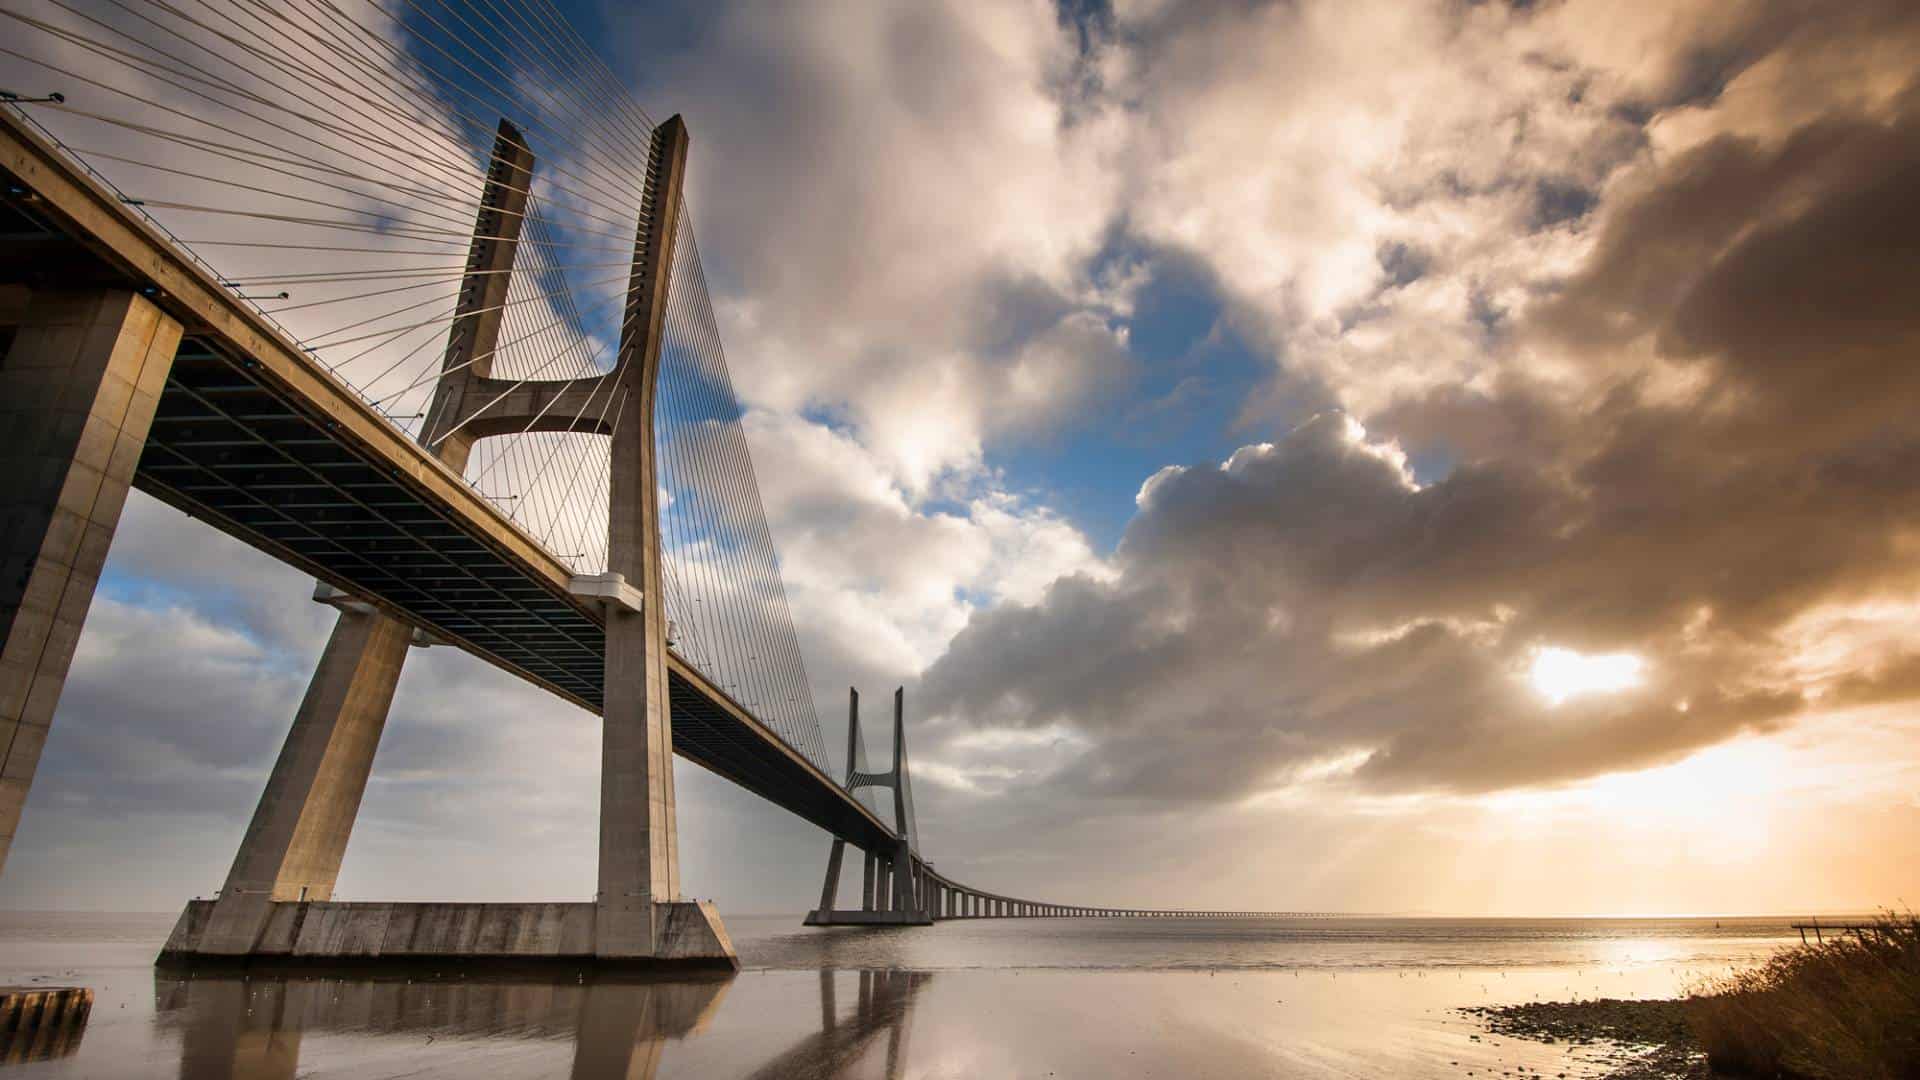 What’s the longest bridge in Europe?